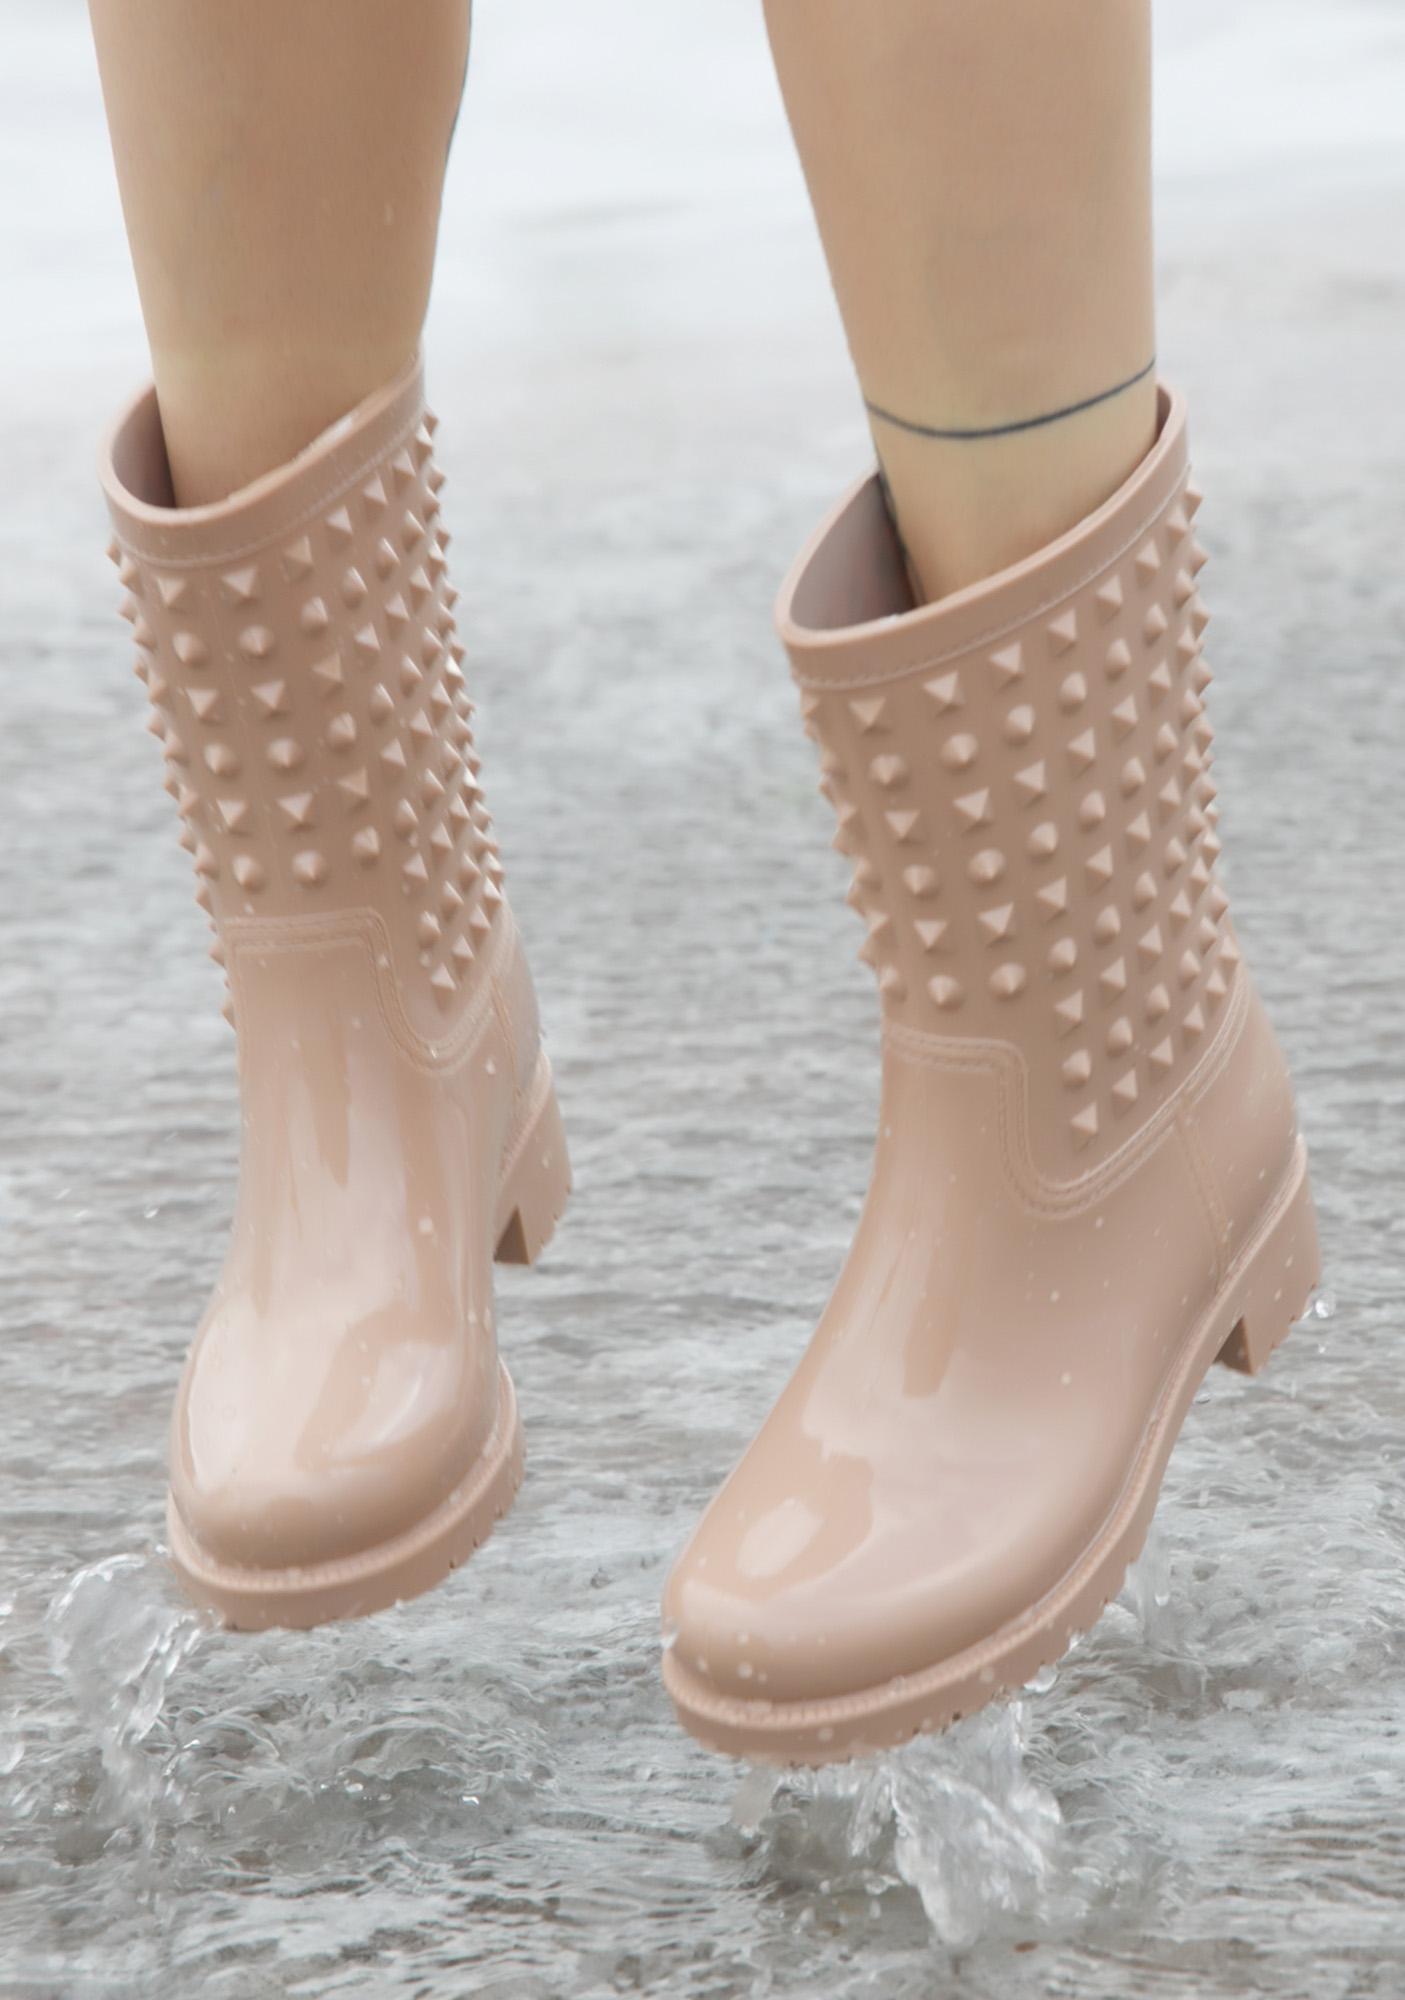 studded rain boots